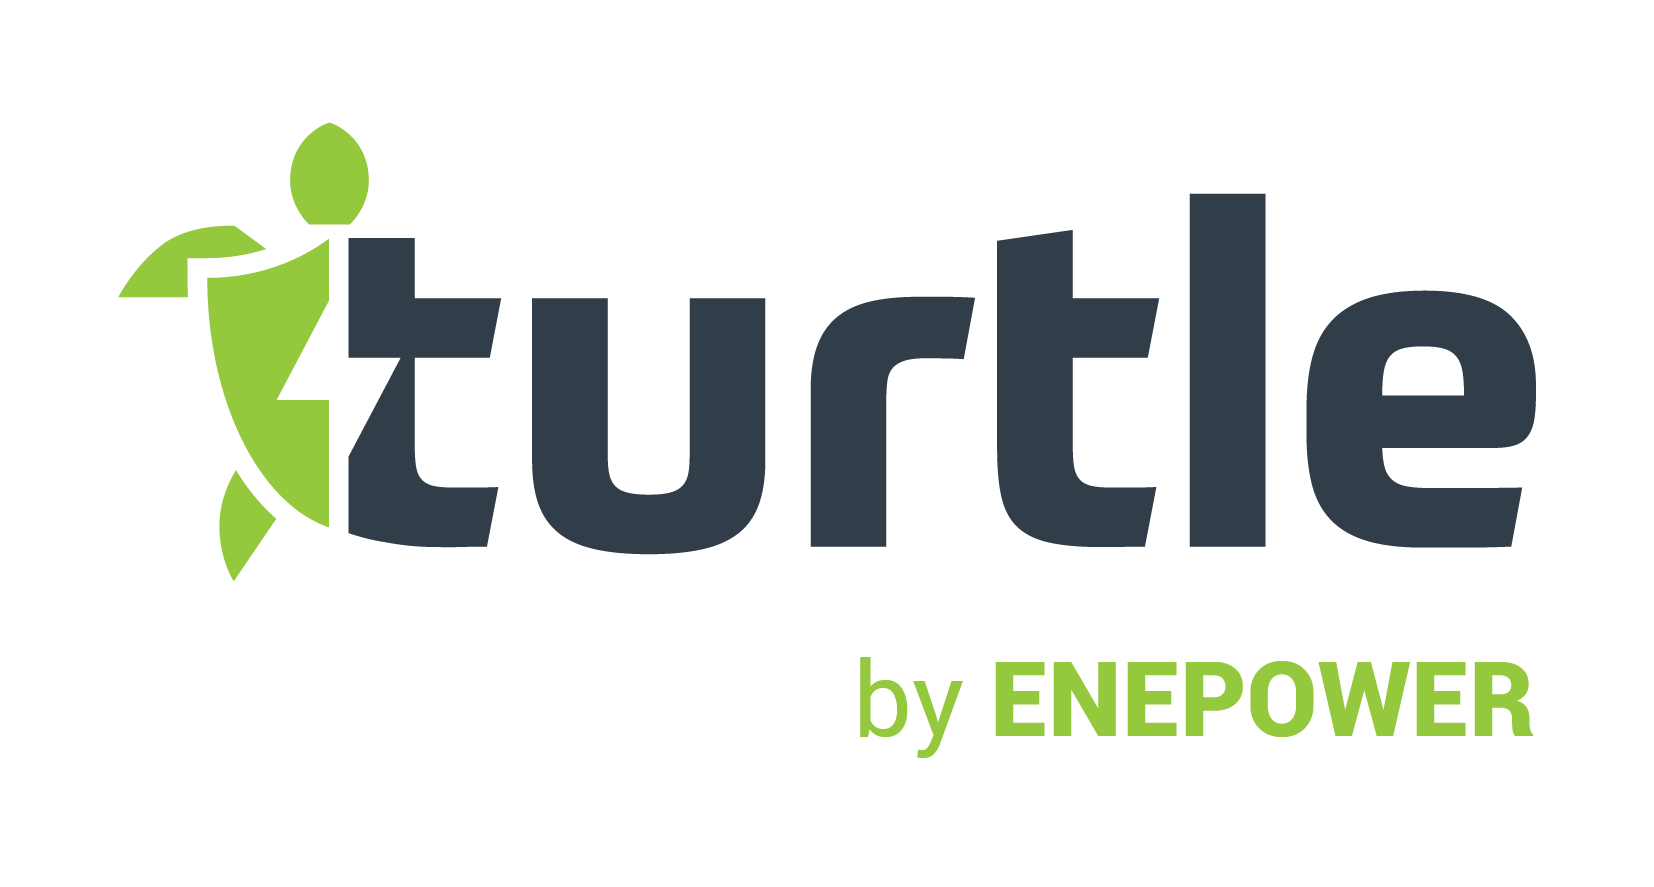 Enepower Turtle logo